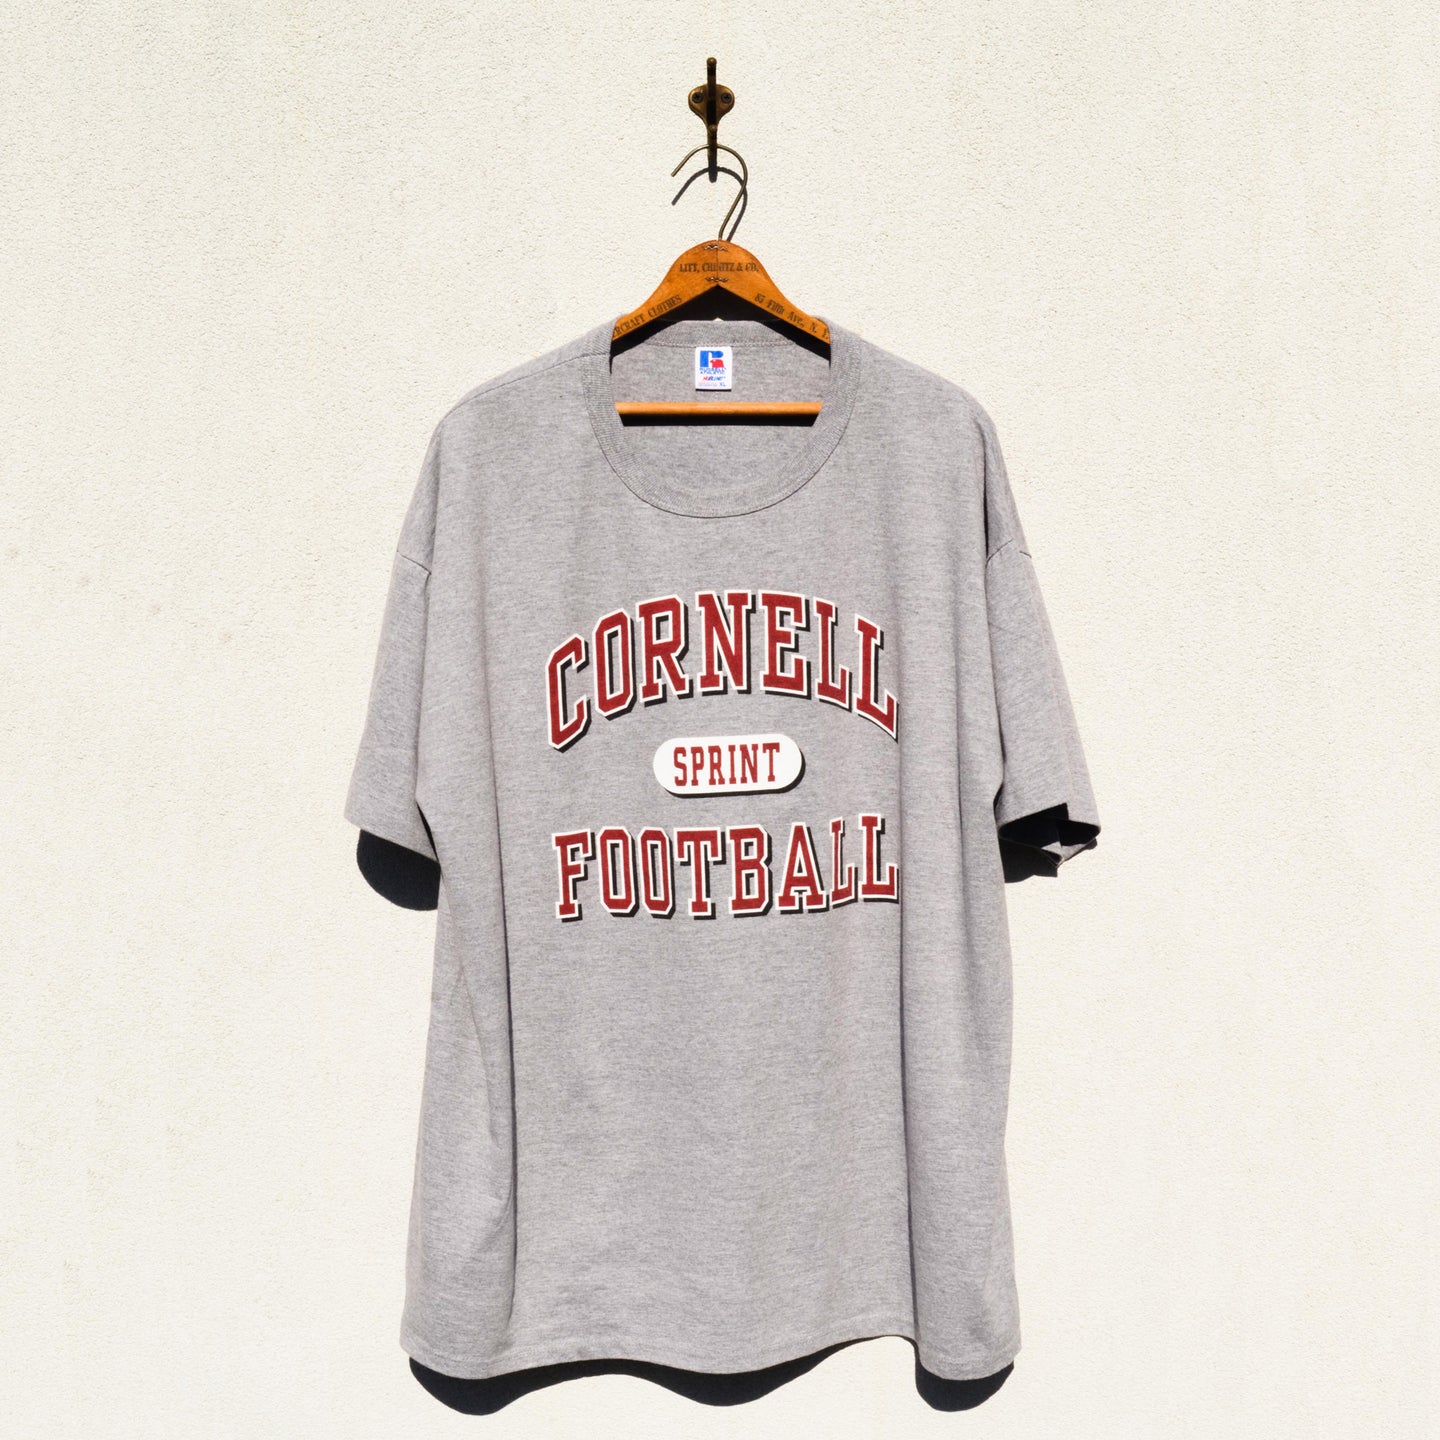 Russel Athletic - Cornell University Football Tee shirt